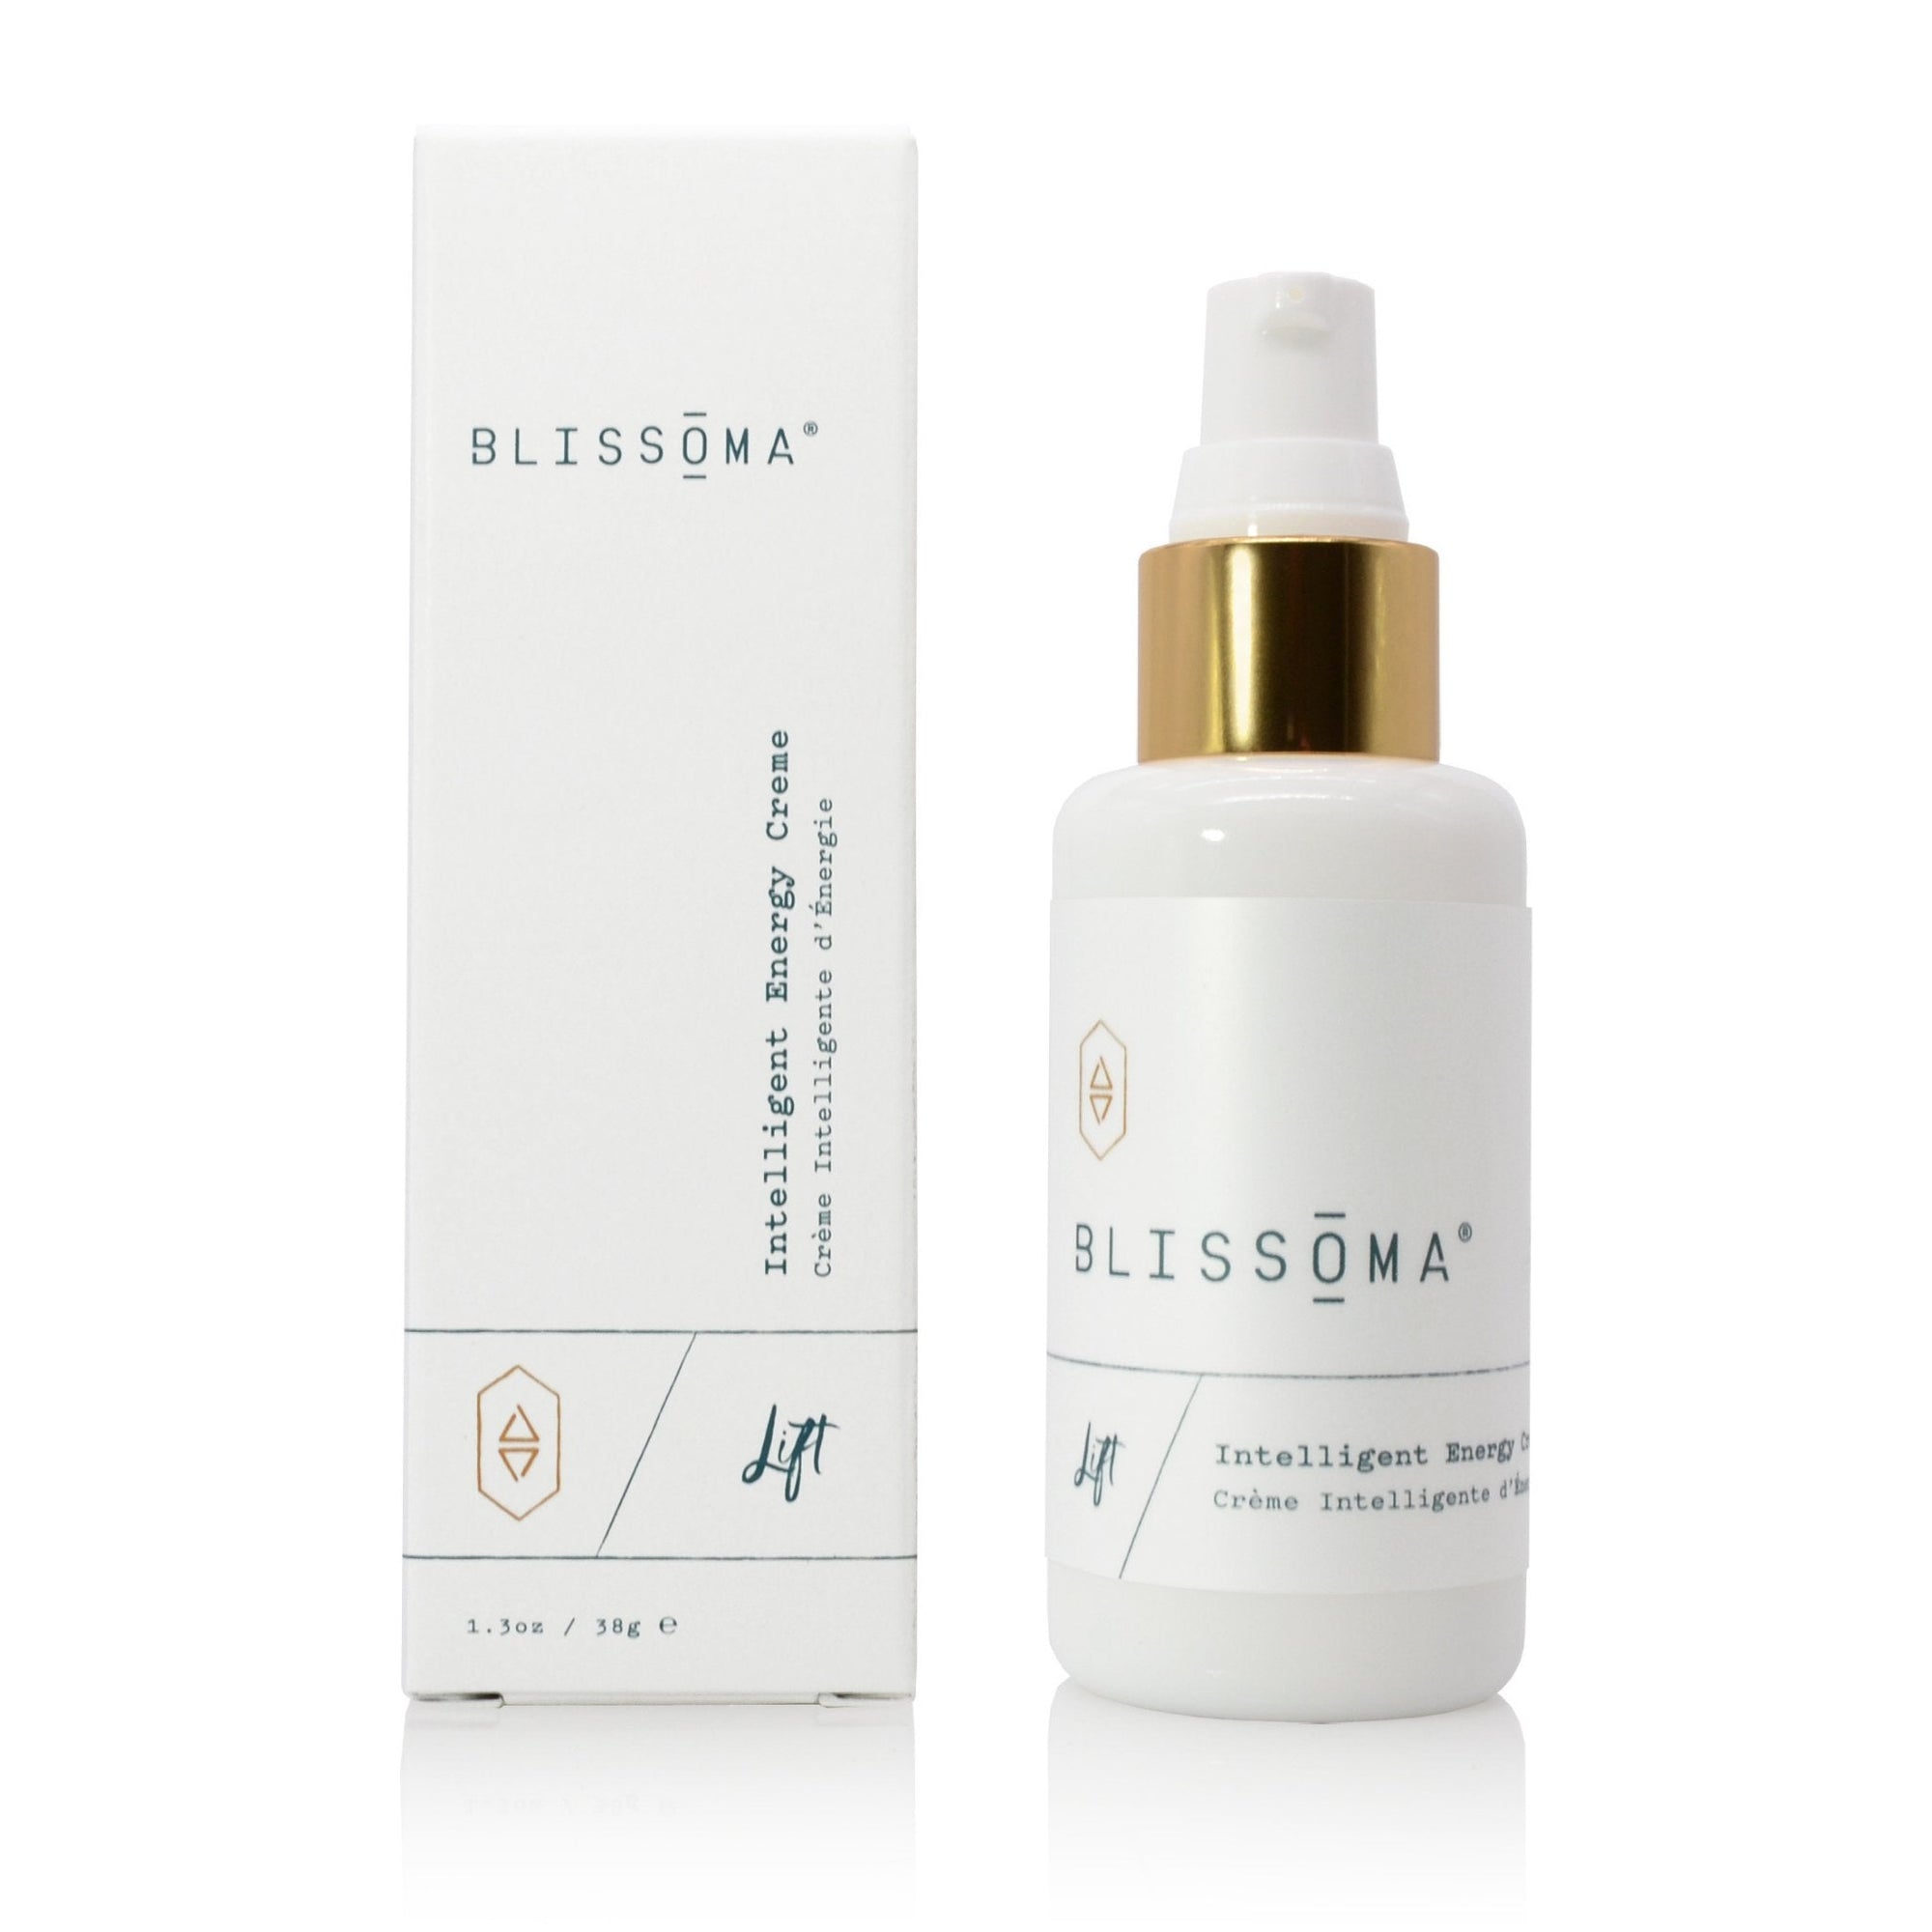 Blissoma - Blissoma Lift Intelligent Energy Creme (expiring 06.24) - ORESTA clean beauty simplified